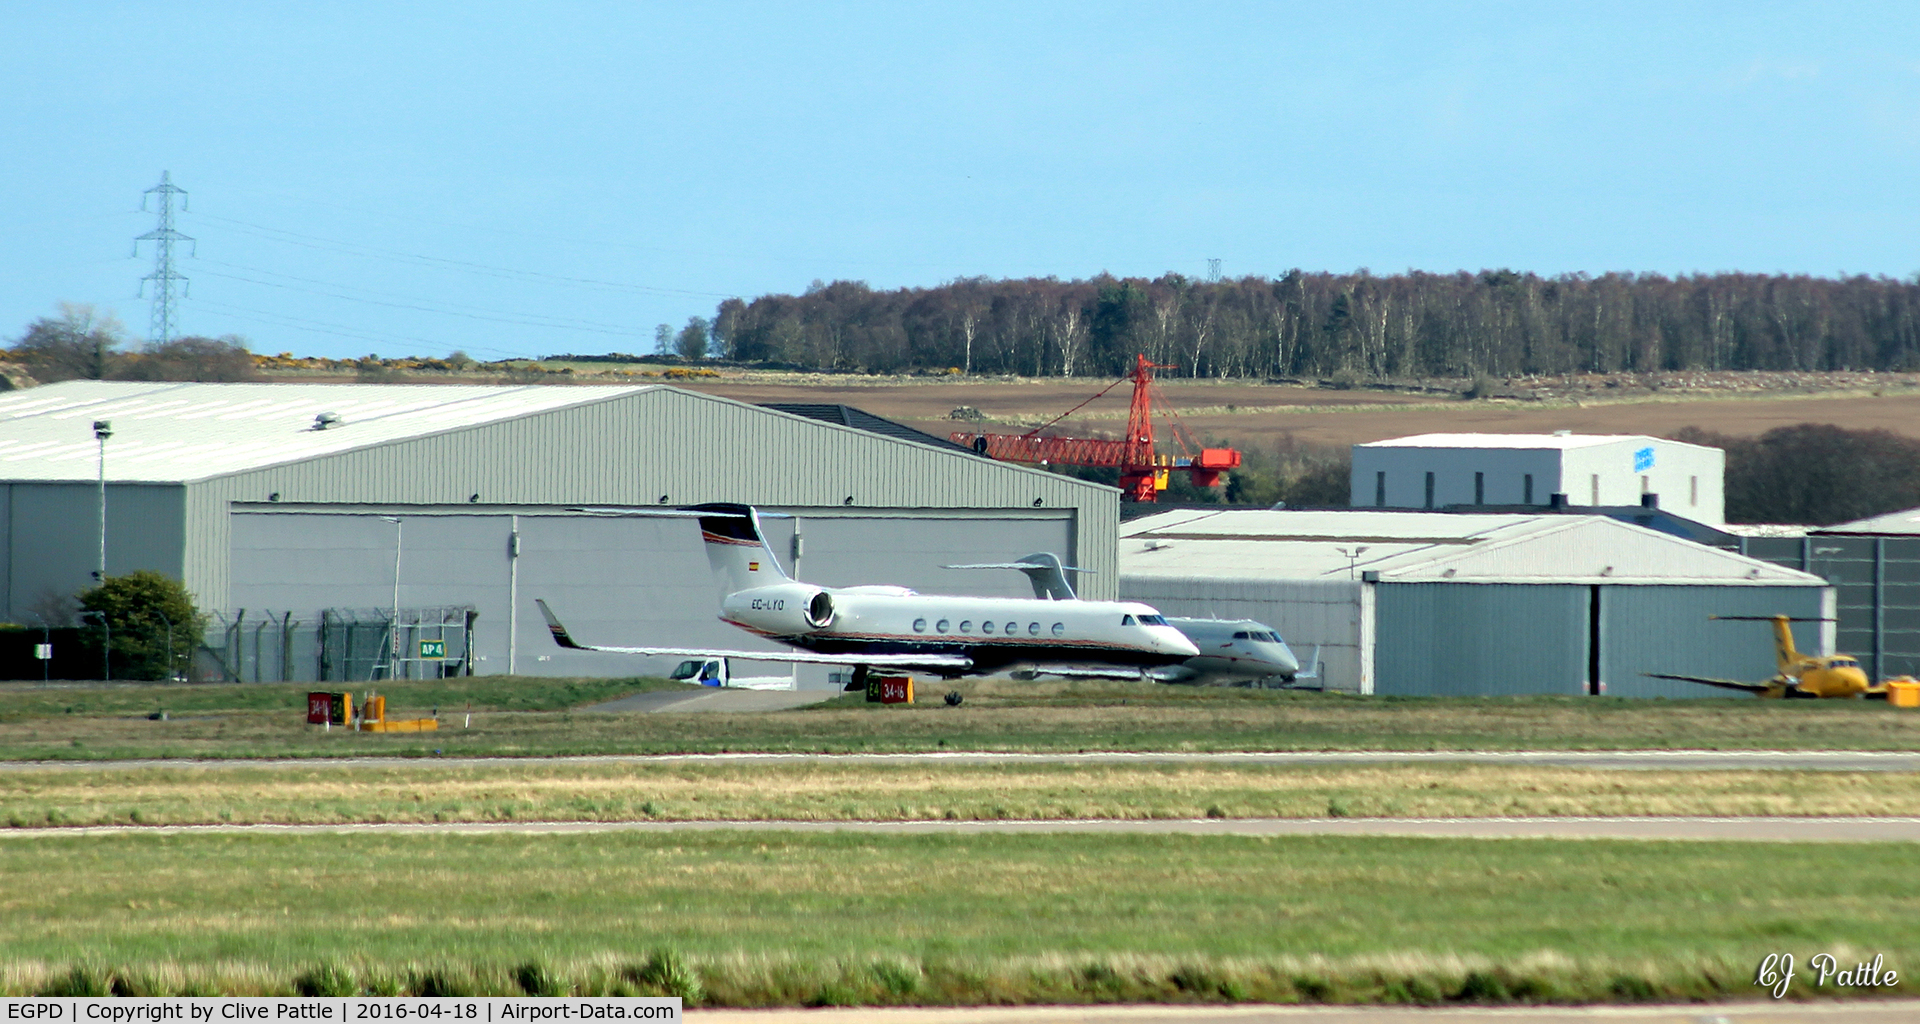 Aberdeen Airport, Aberdeen, Scotland United Kingdom (EGPD) - GA area on east side at Aberdeen EGPD